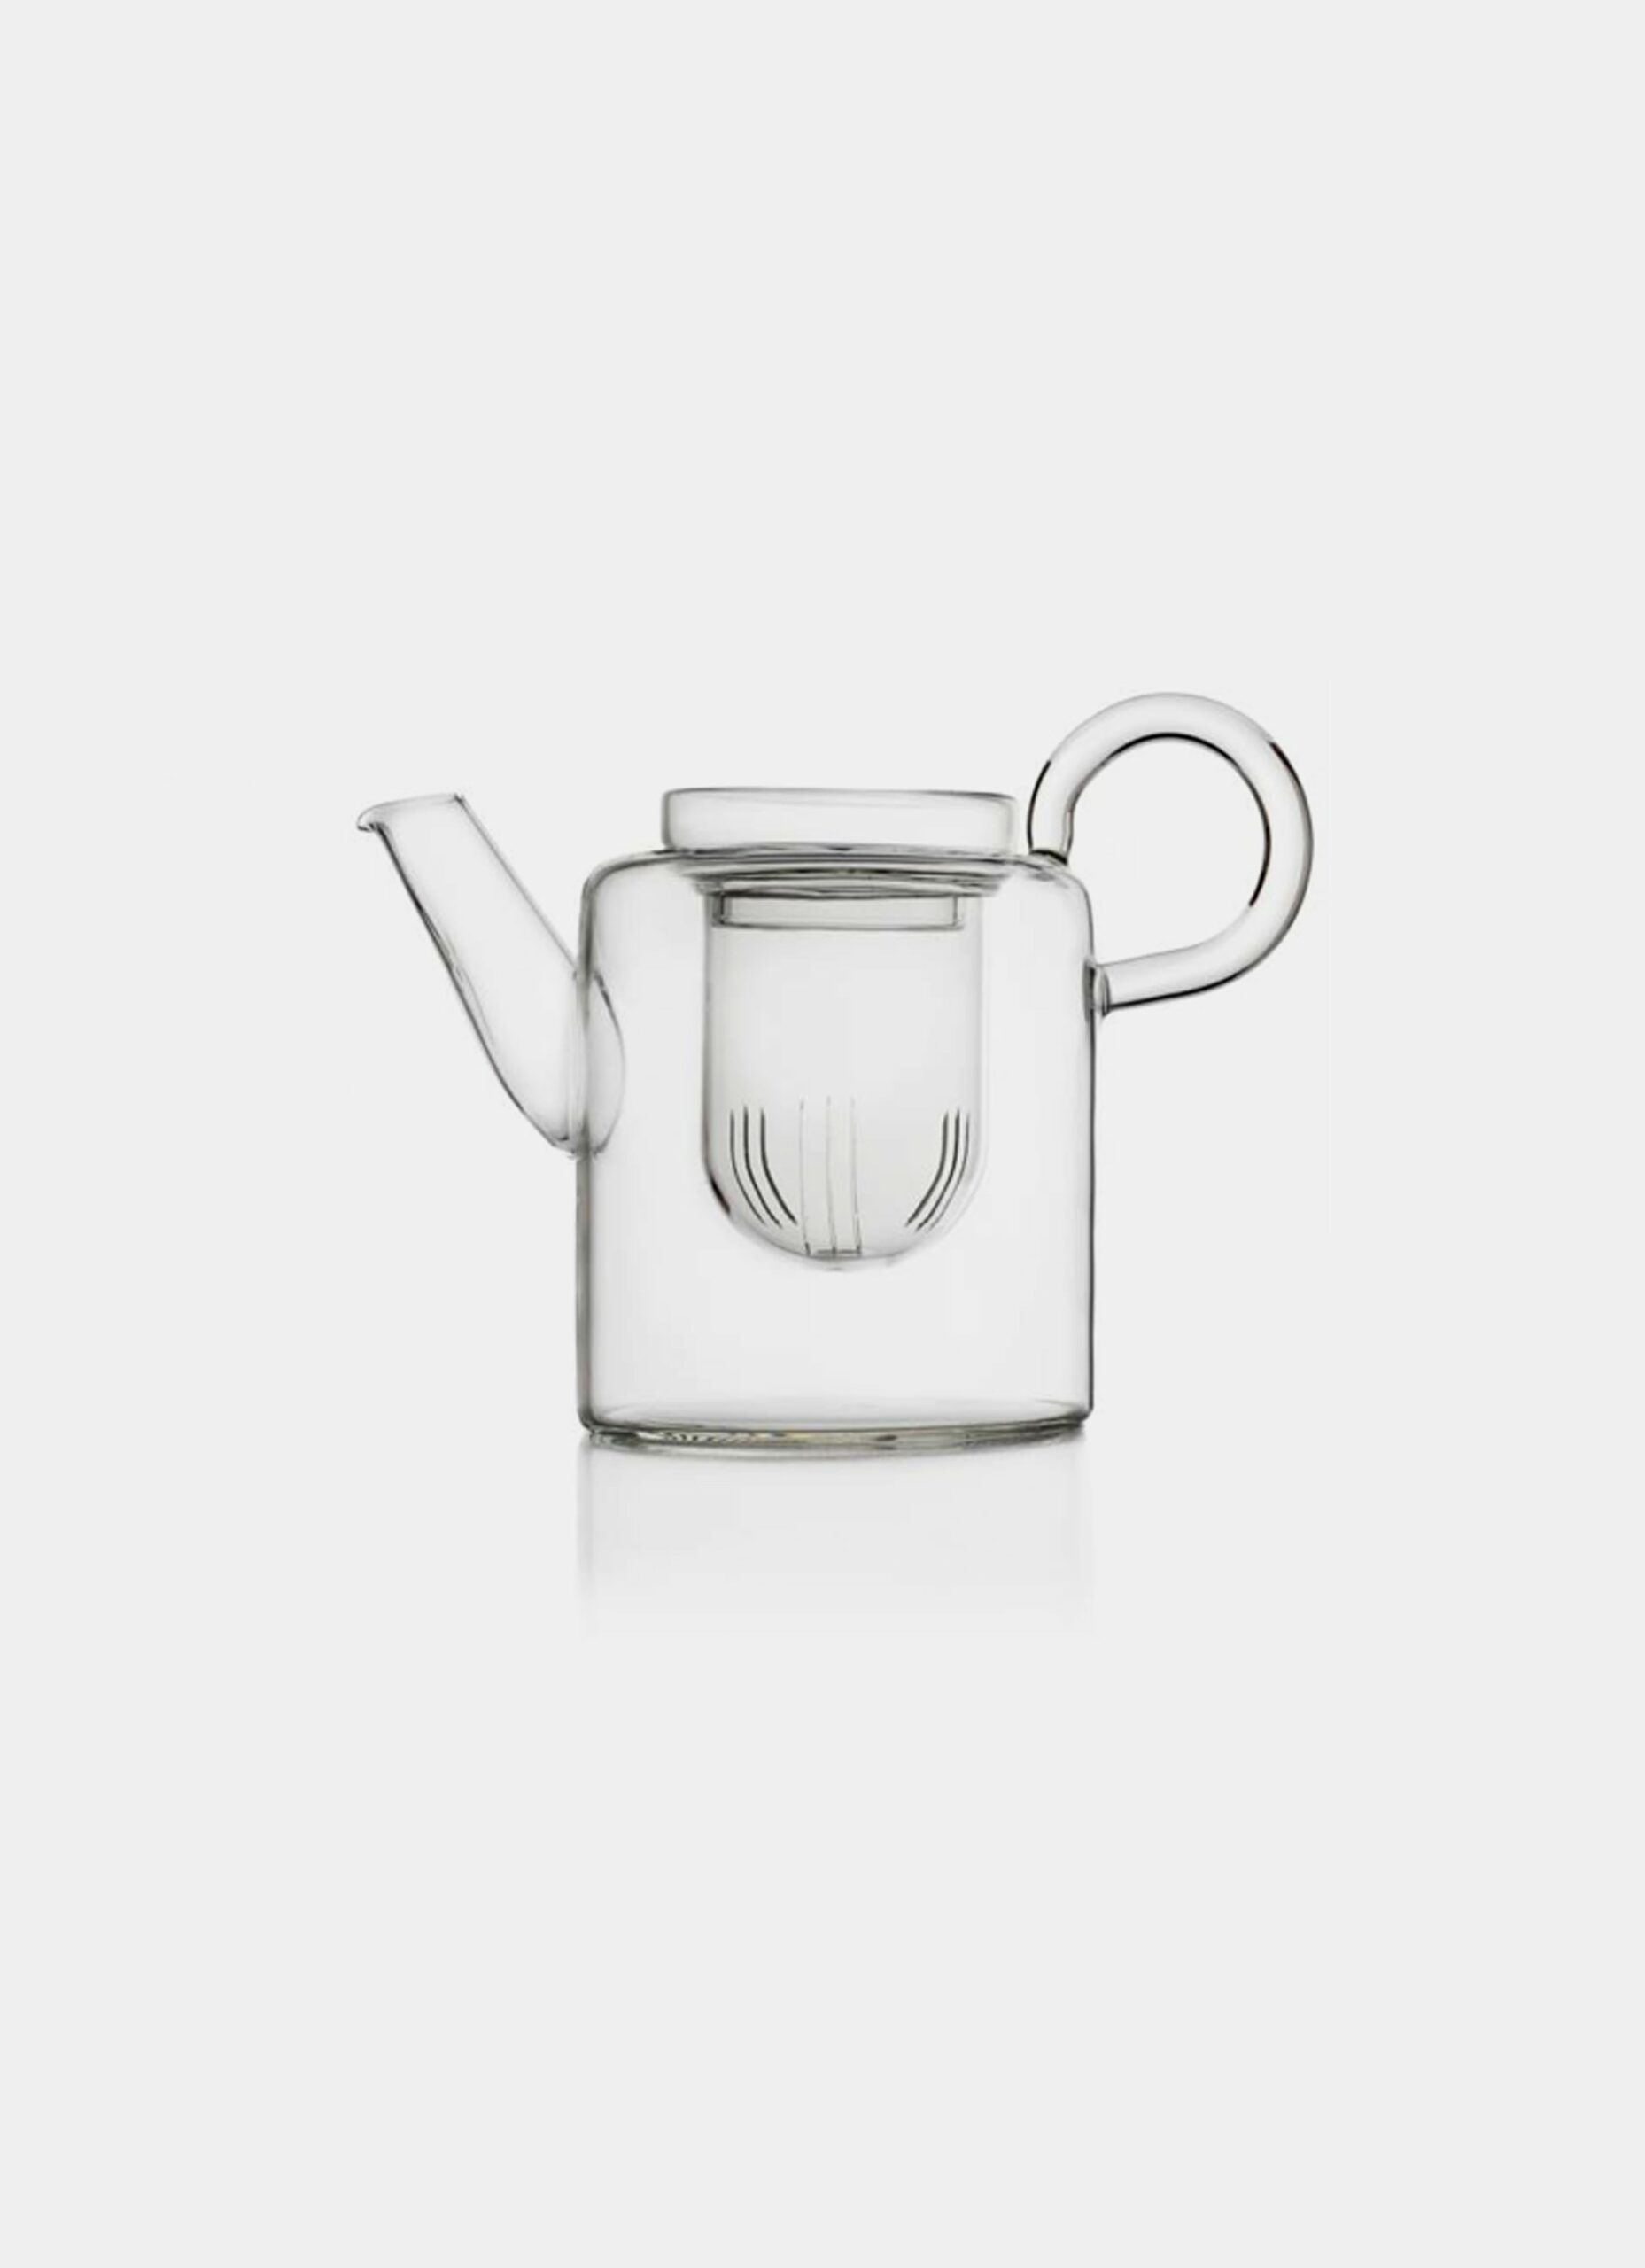 Ichendorf Milano - Marco Sironi - Piuma - Tall Tea pot with Filter